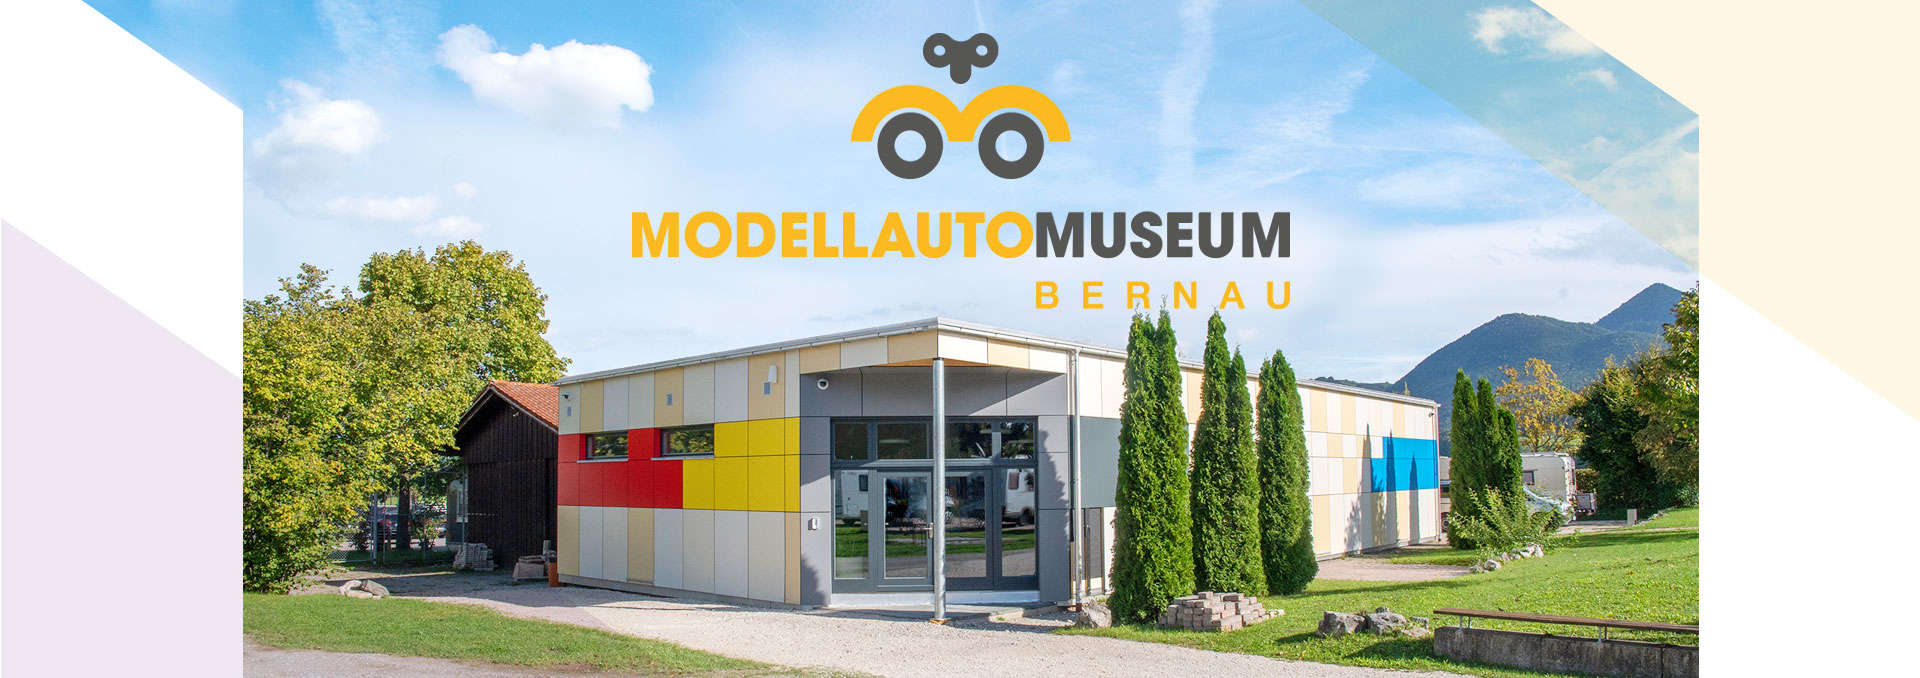 Modellautomuseum Bernau